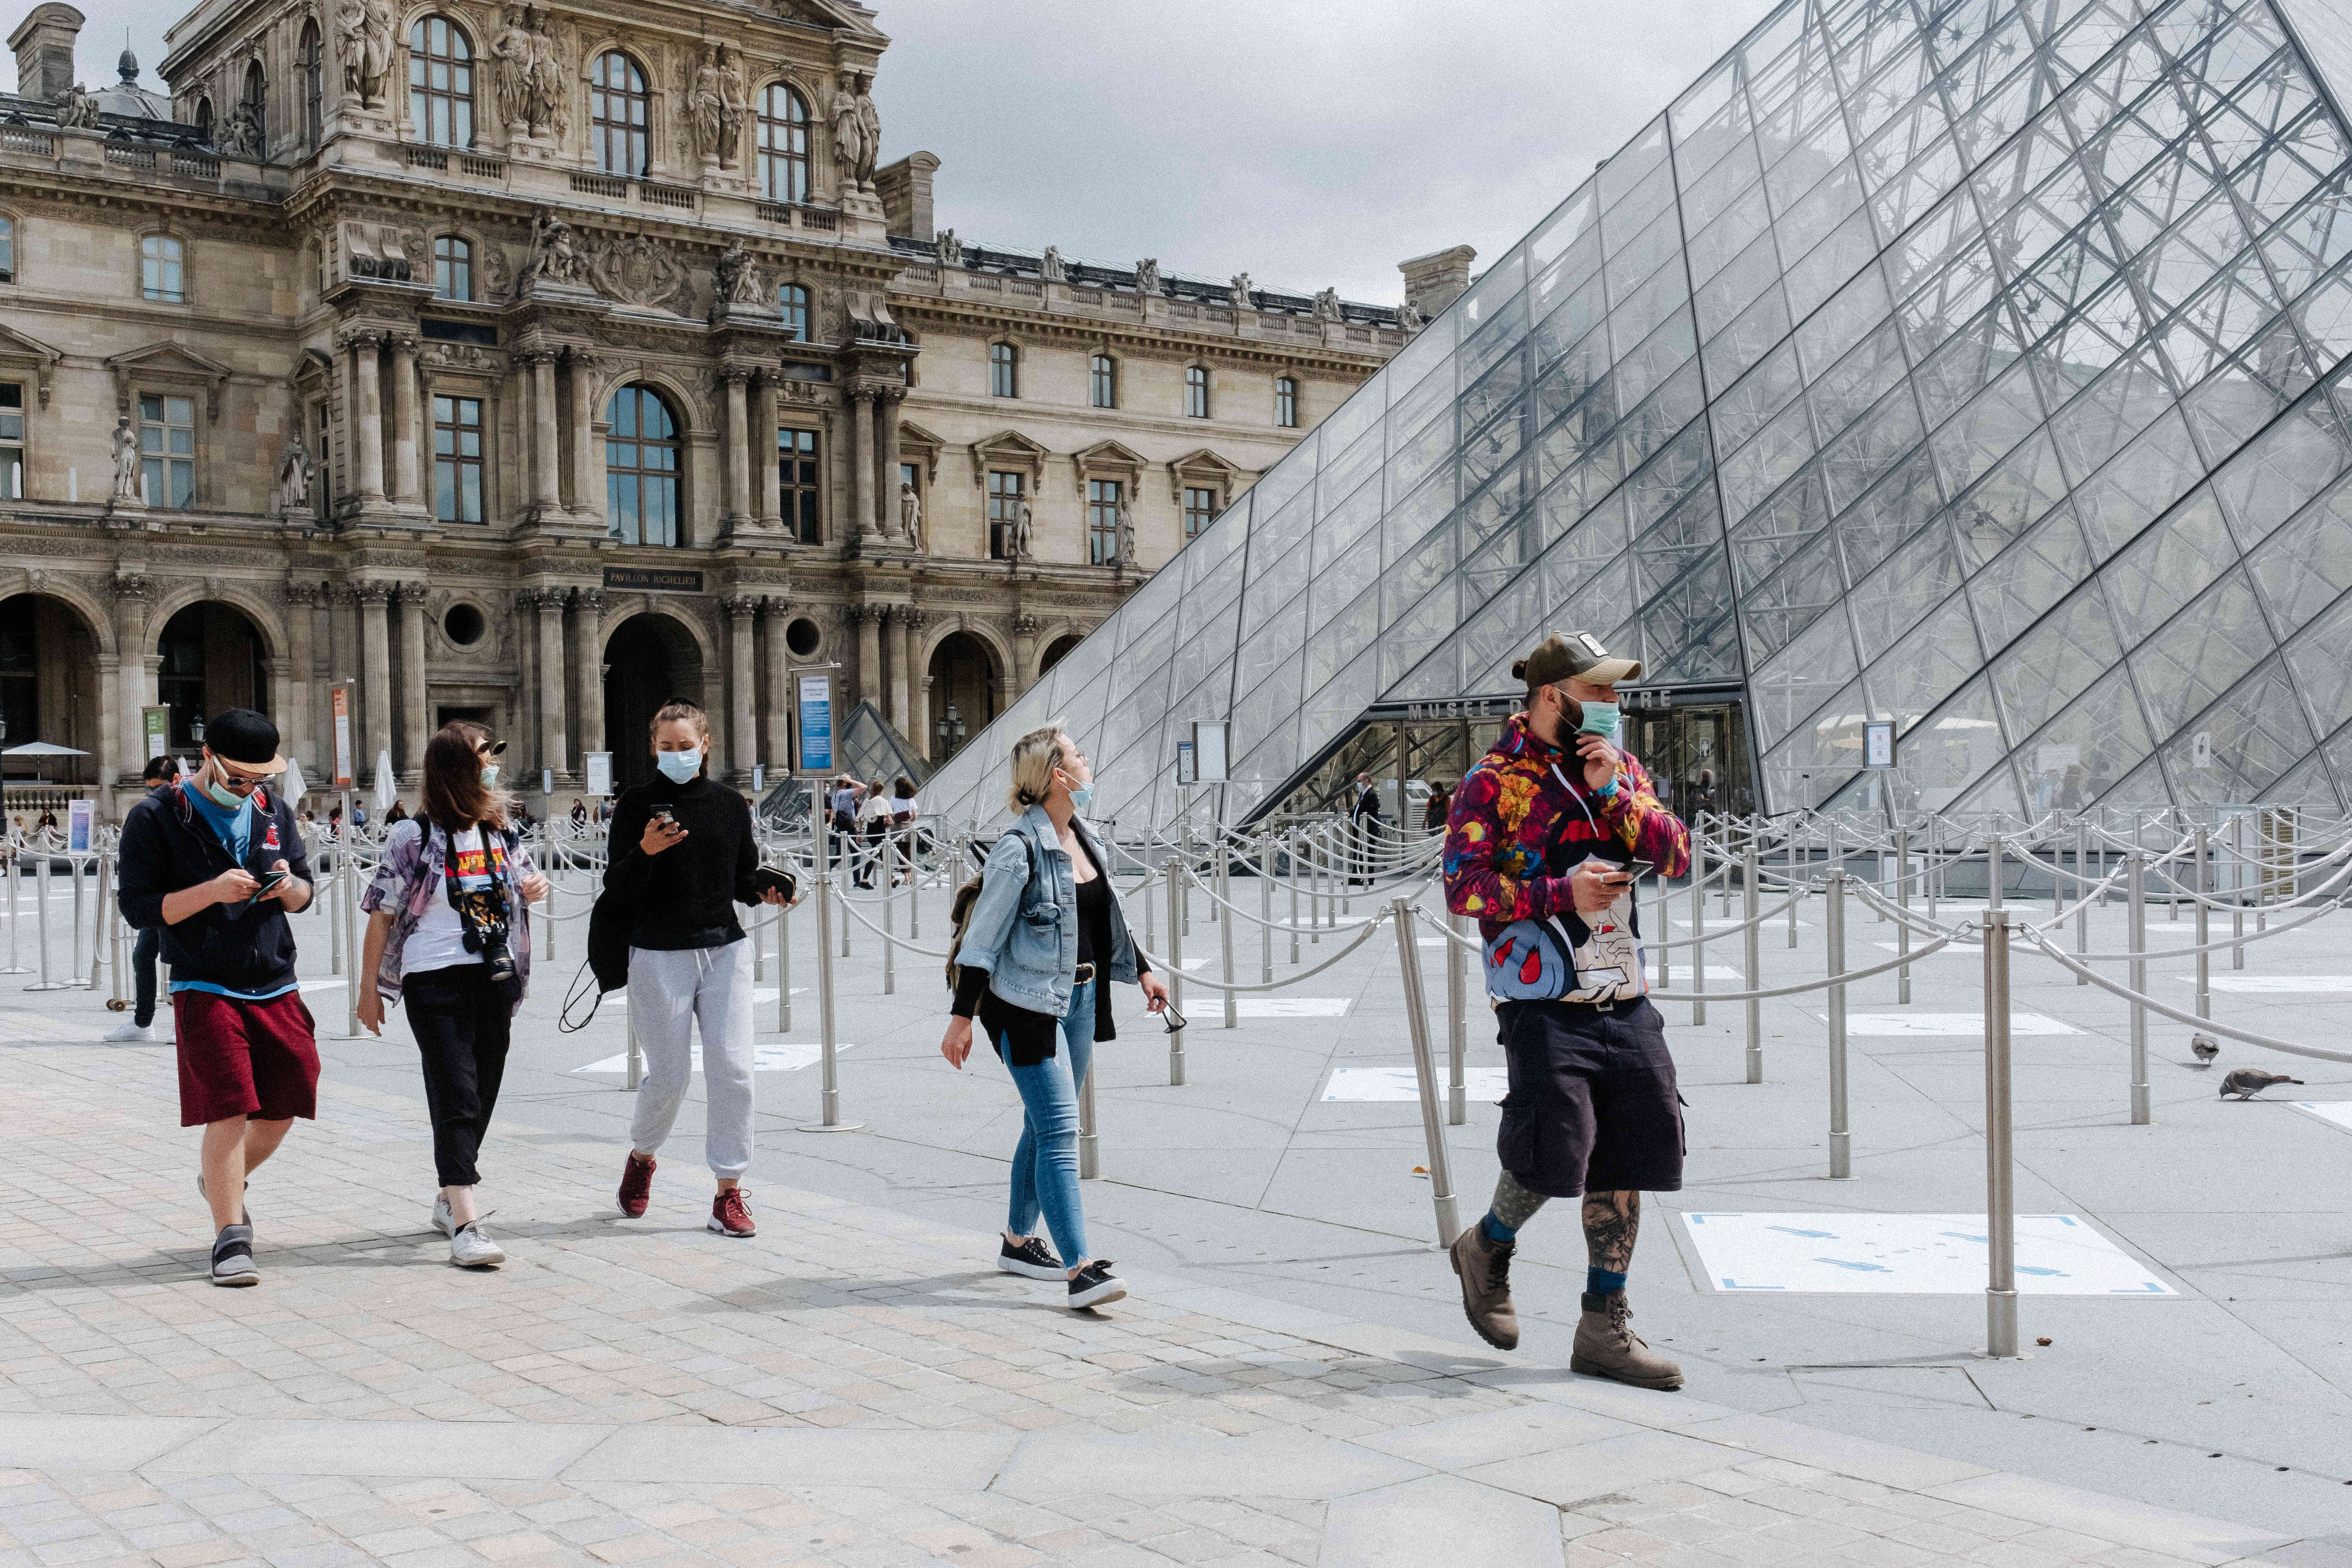 06/07/2020 Primeras imágenes de la reapertura del Louvre durante la pandemia de coronavirus.
POLITICA INTERNACIONAL
Jan Schmidt-Whitley/Le Pictorium / DPA
